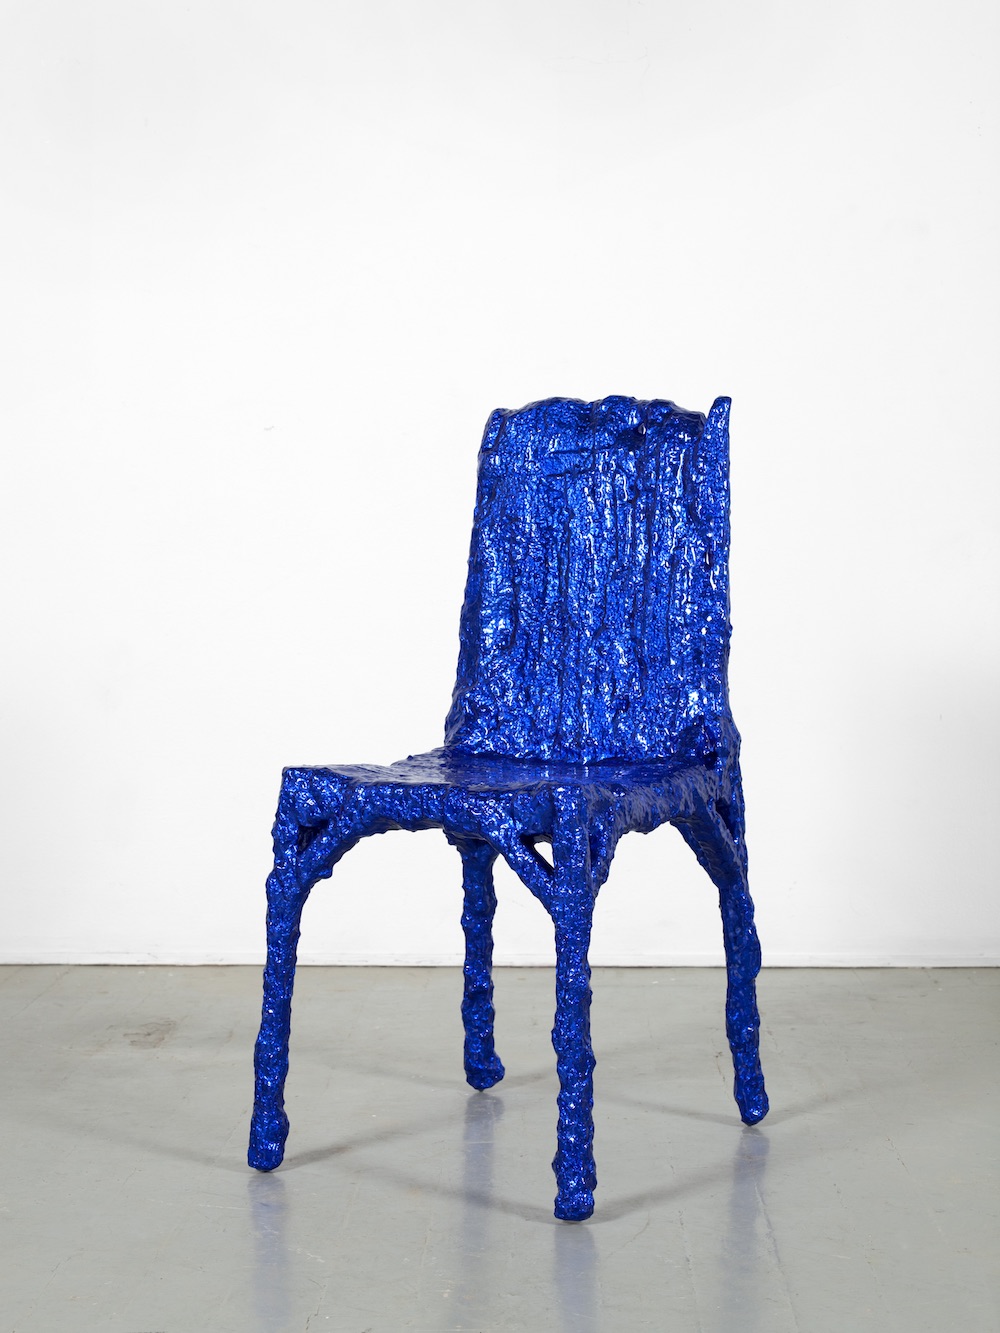 Chris Schanck, "Chair," Alufoil, courtesy to Cranbrook Academy of Art.